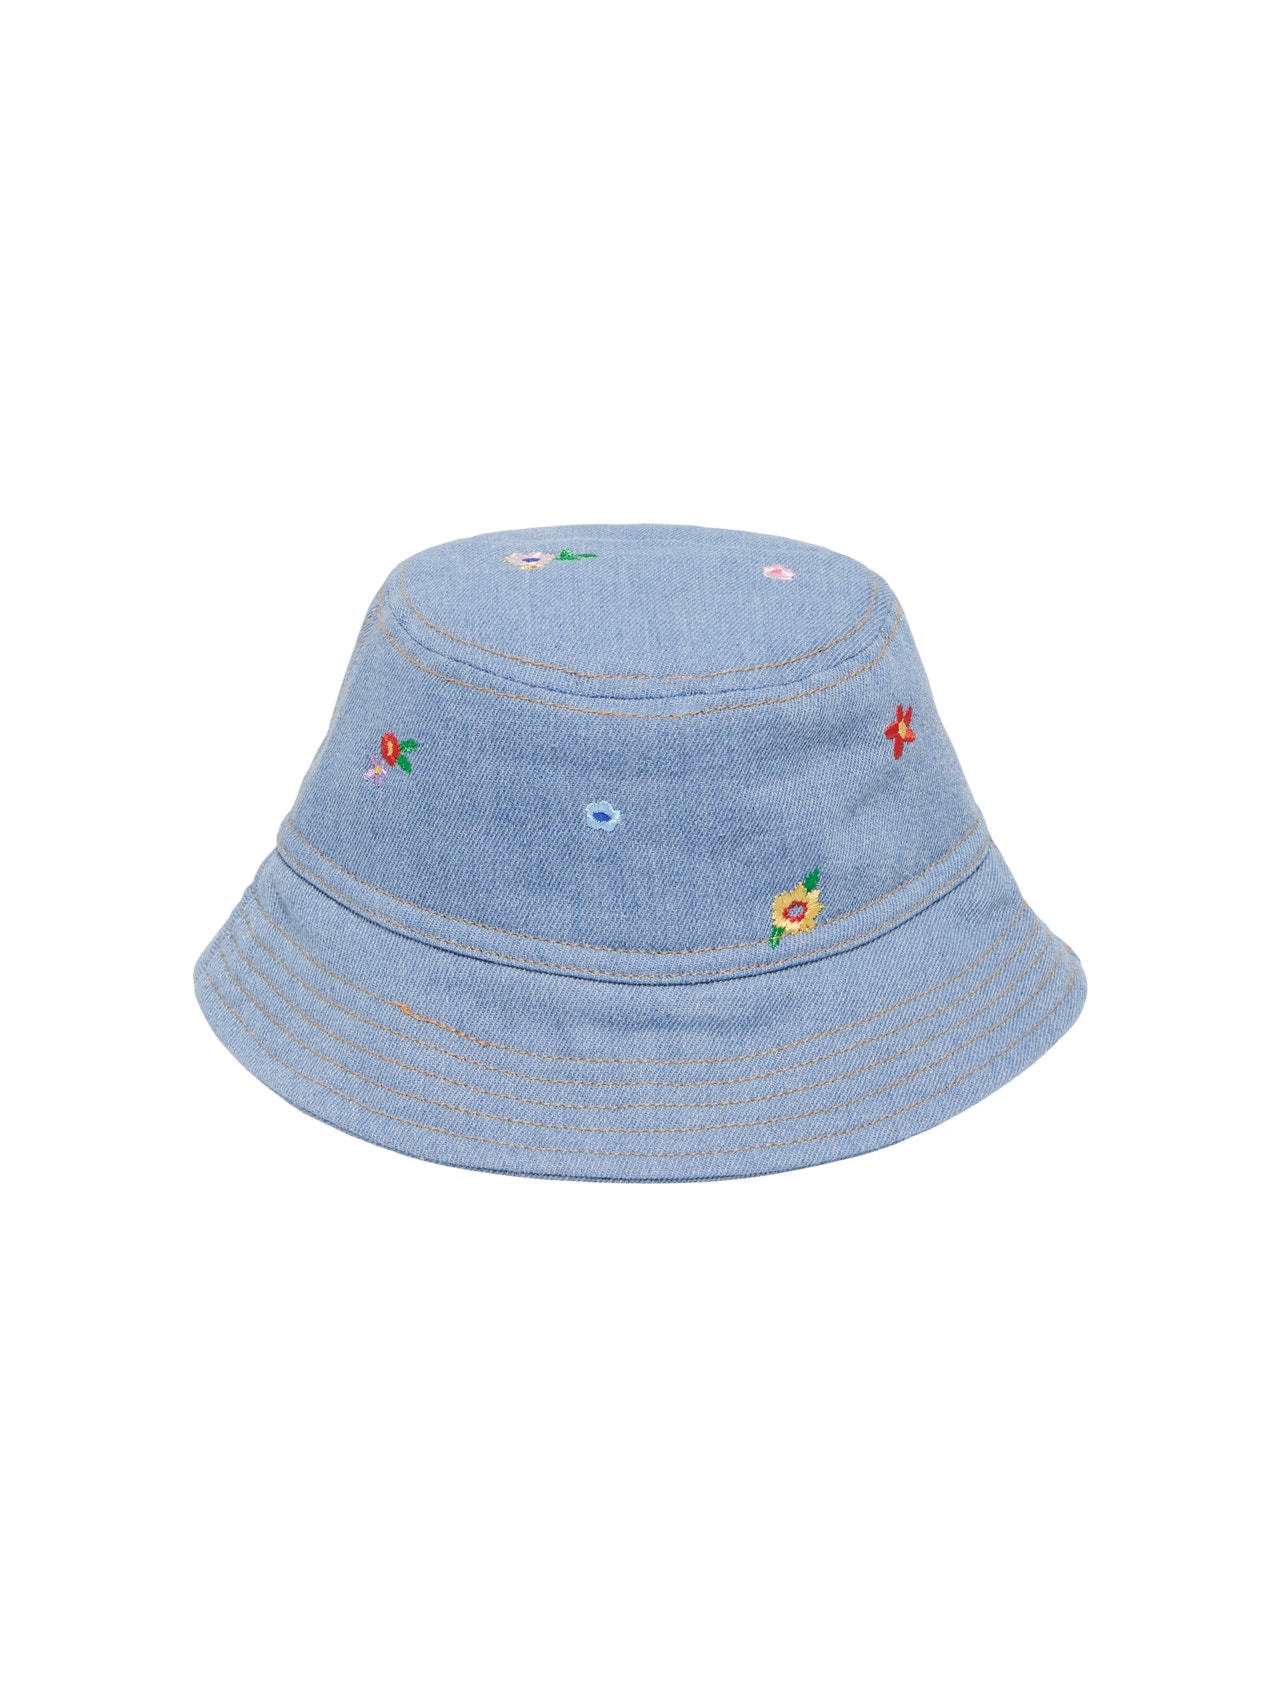 ONLY Hat -Light Blue Denim - 15294650